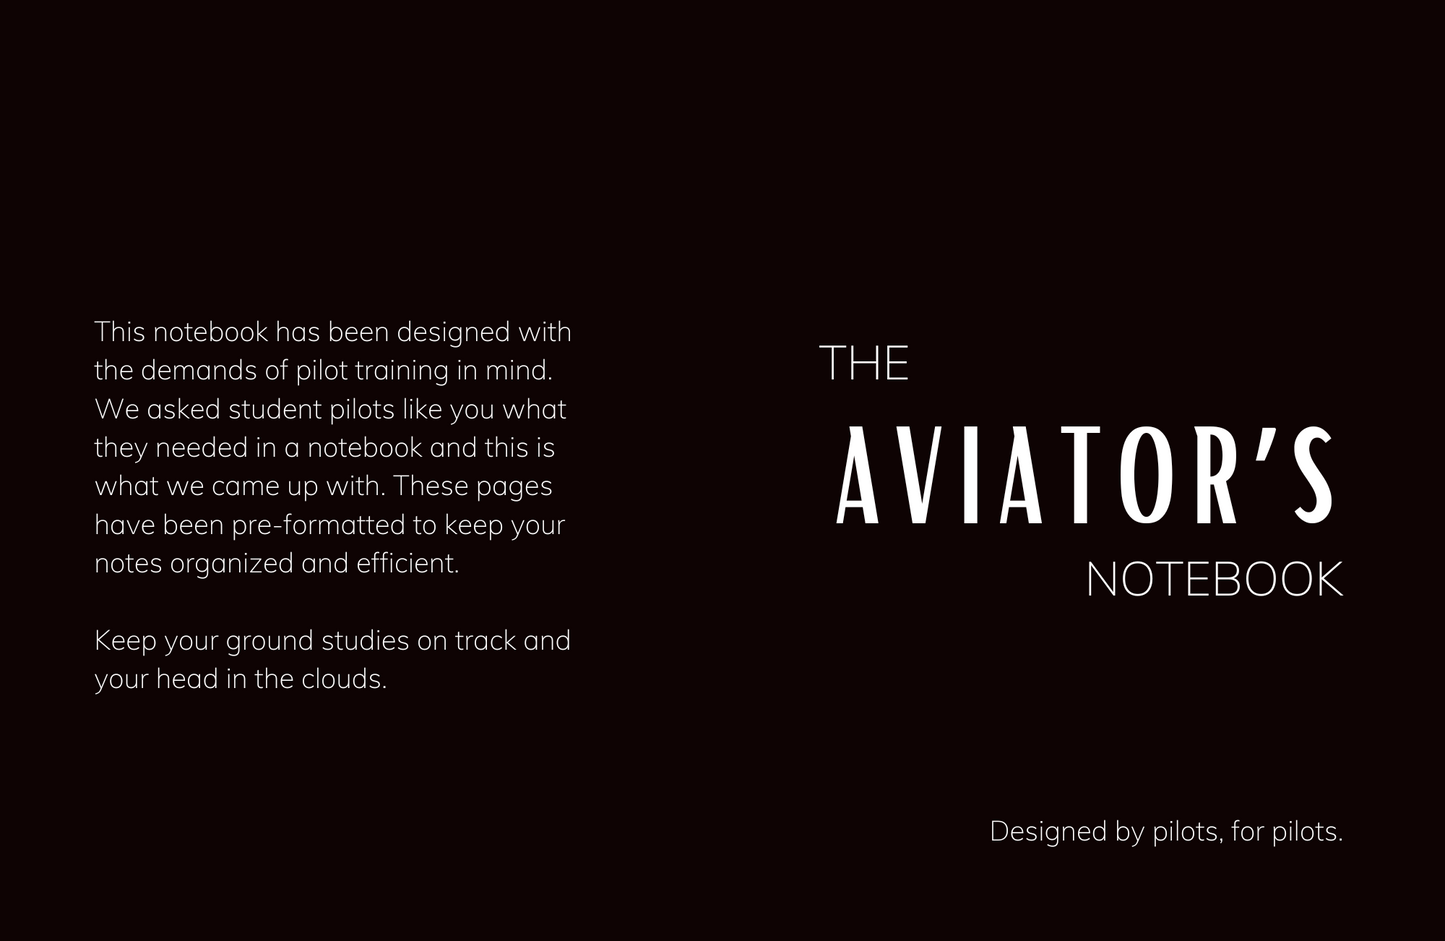 The Aviator's Notebook